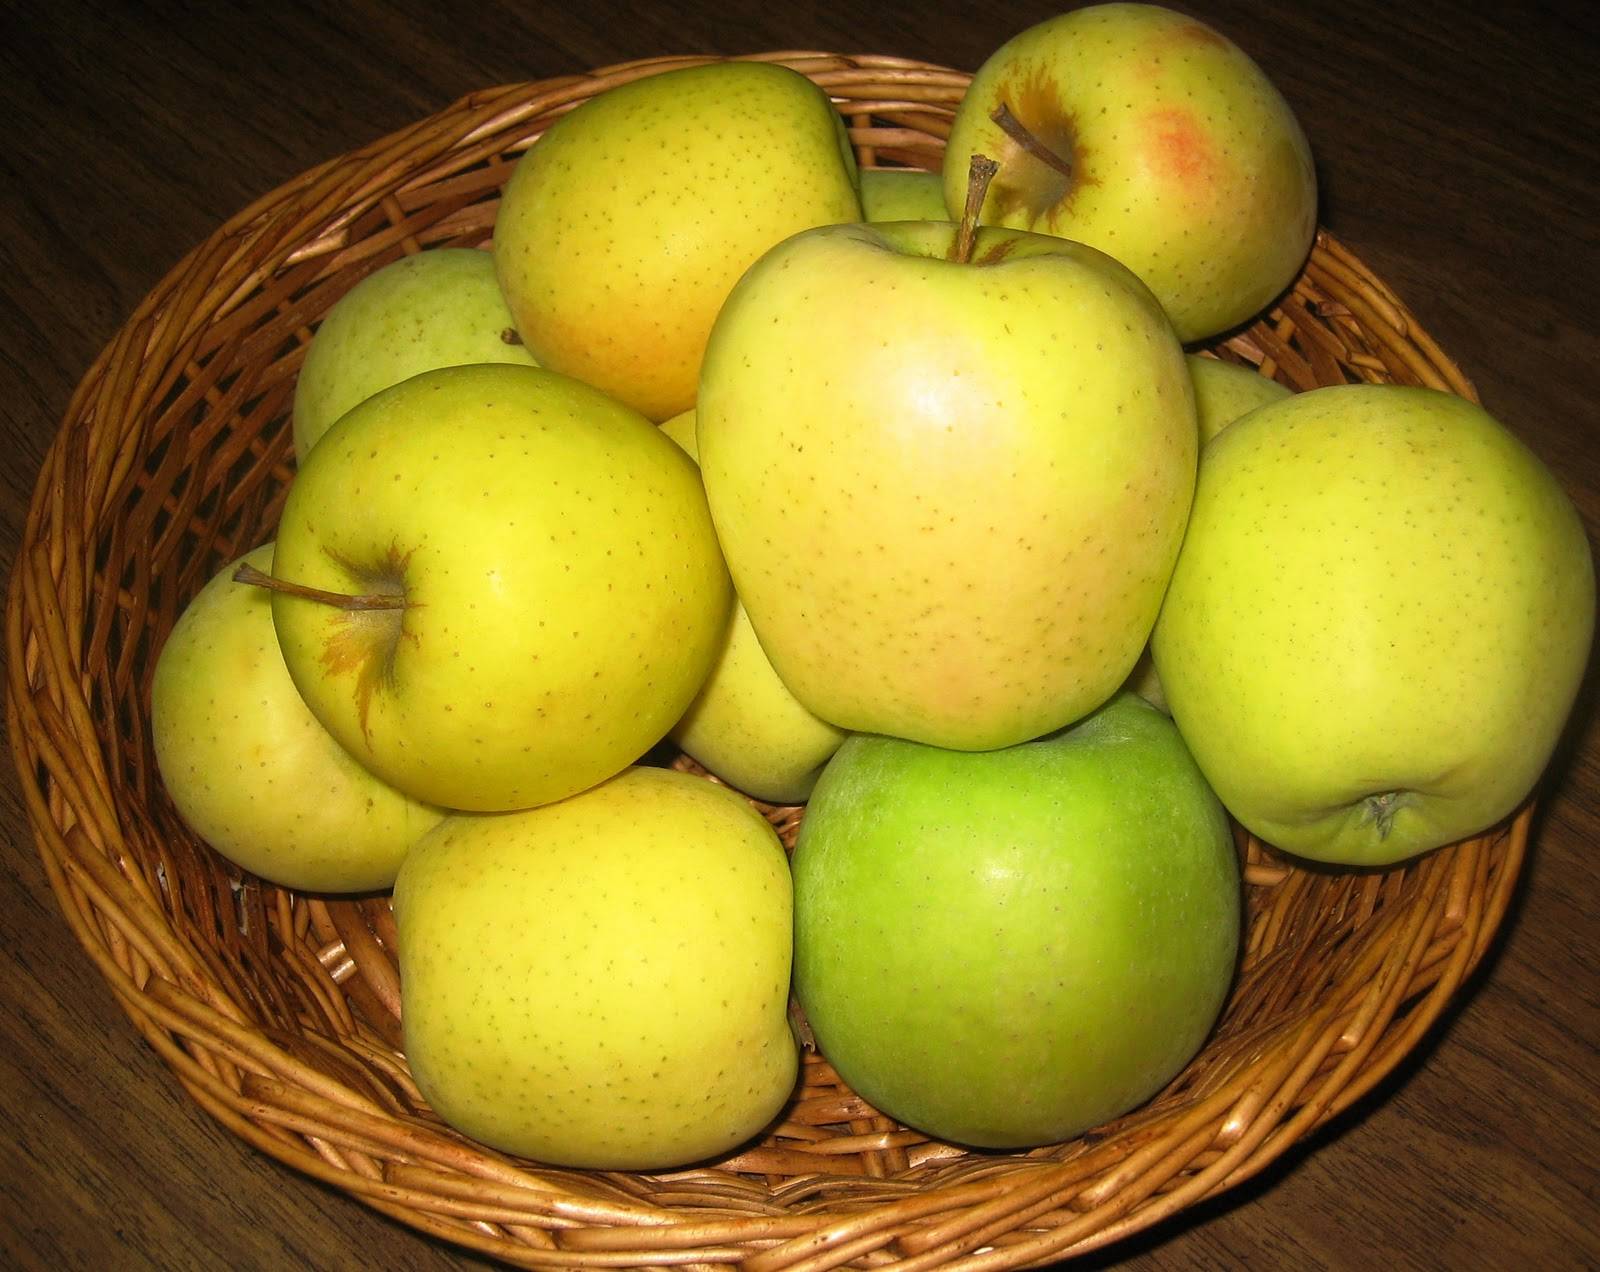 Сорт яблони голден фото и описание